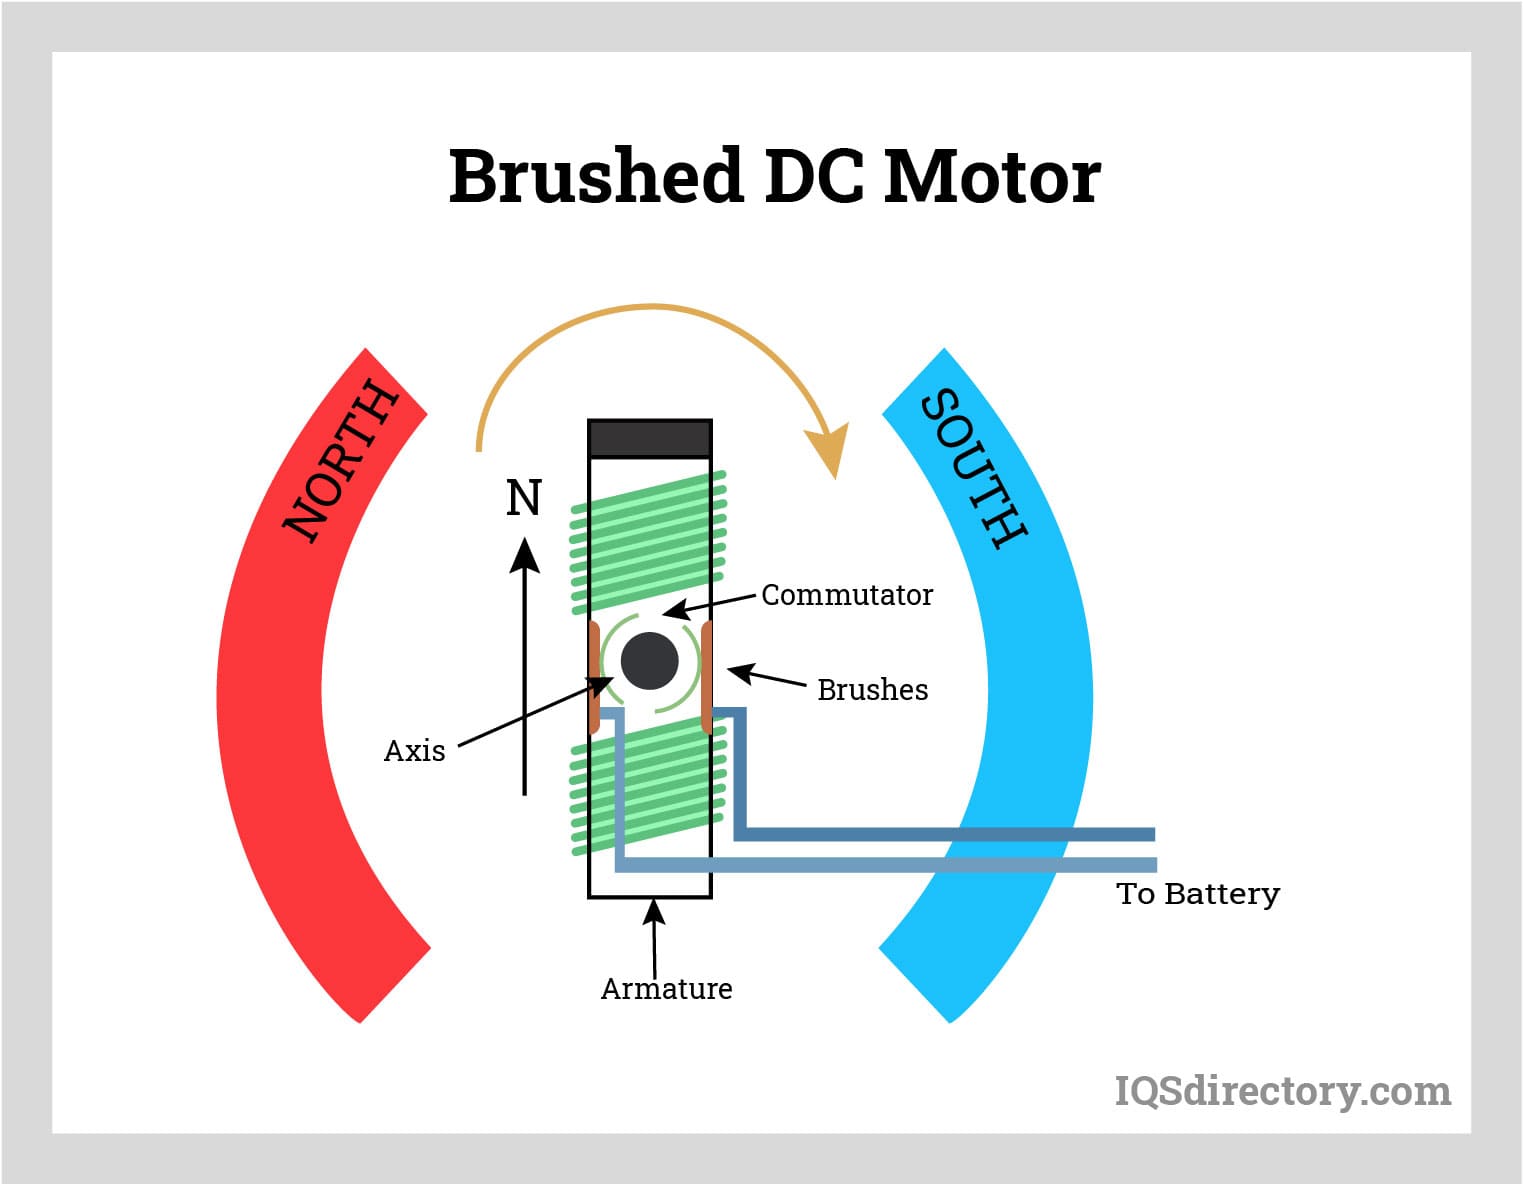 Motor Selection Basics: Types of AC/DC Motors